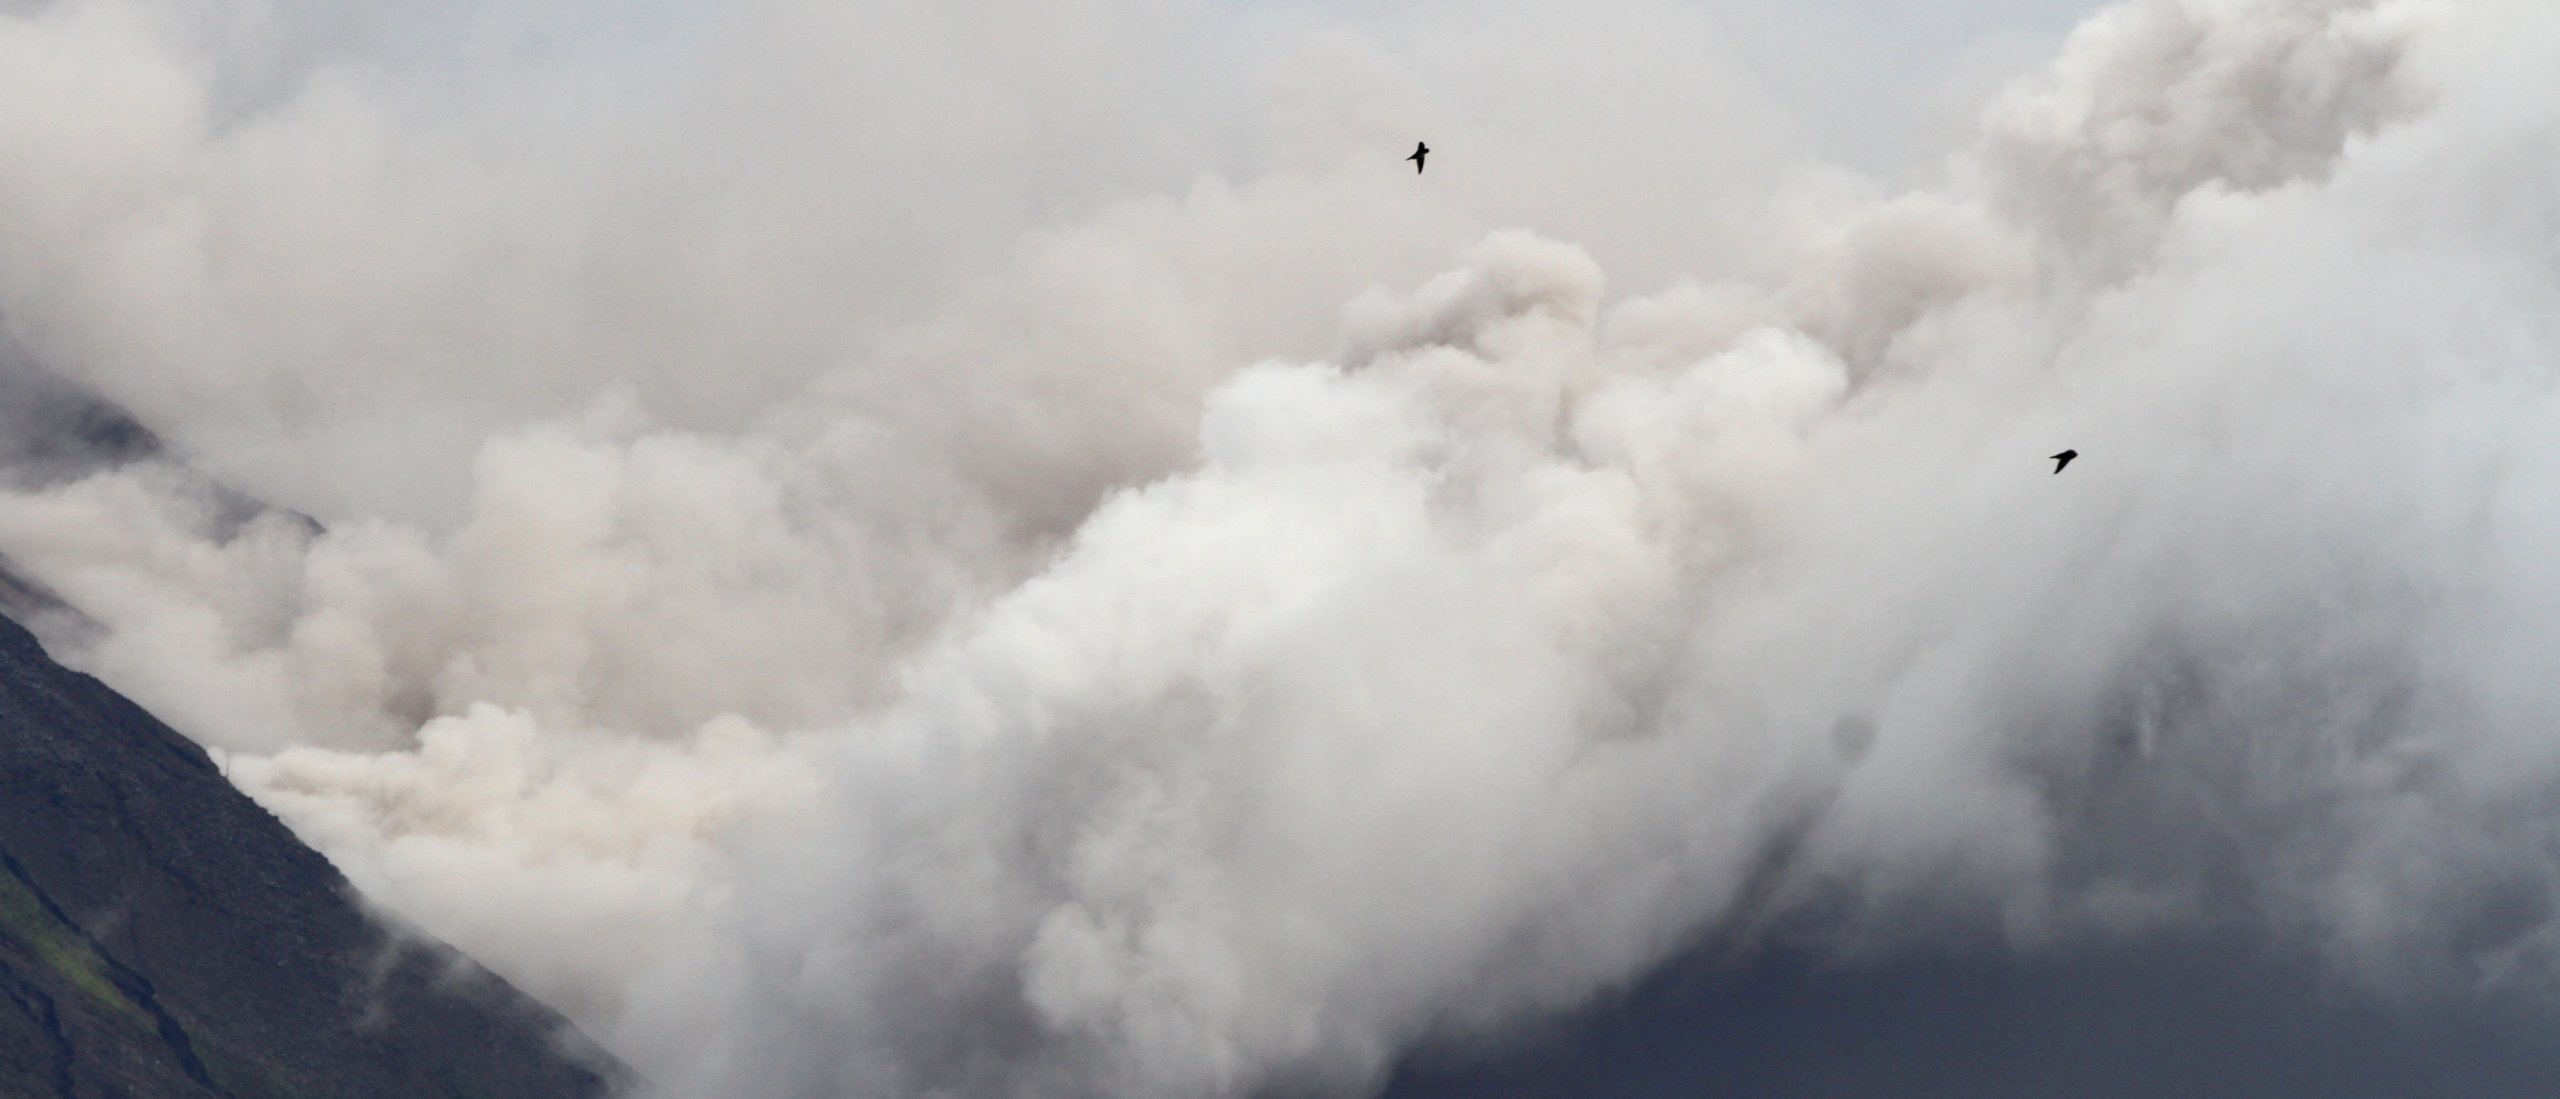 Mount Semeru volcano spews ashes and clouds as seen from Lumajang, Indonesia, Dec. 6, 2021. (Antara Foto via Reuters)